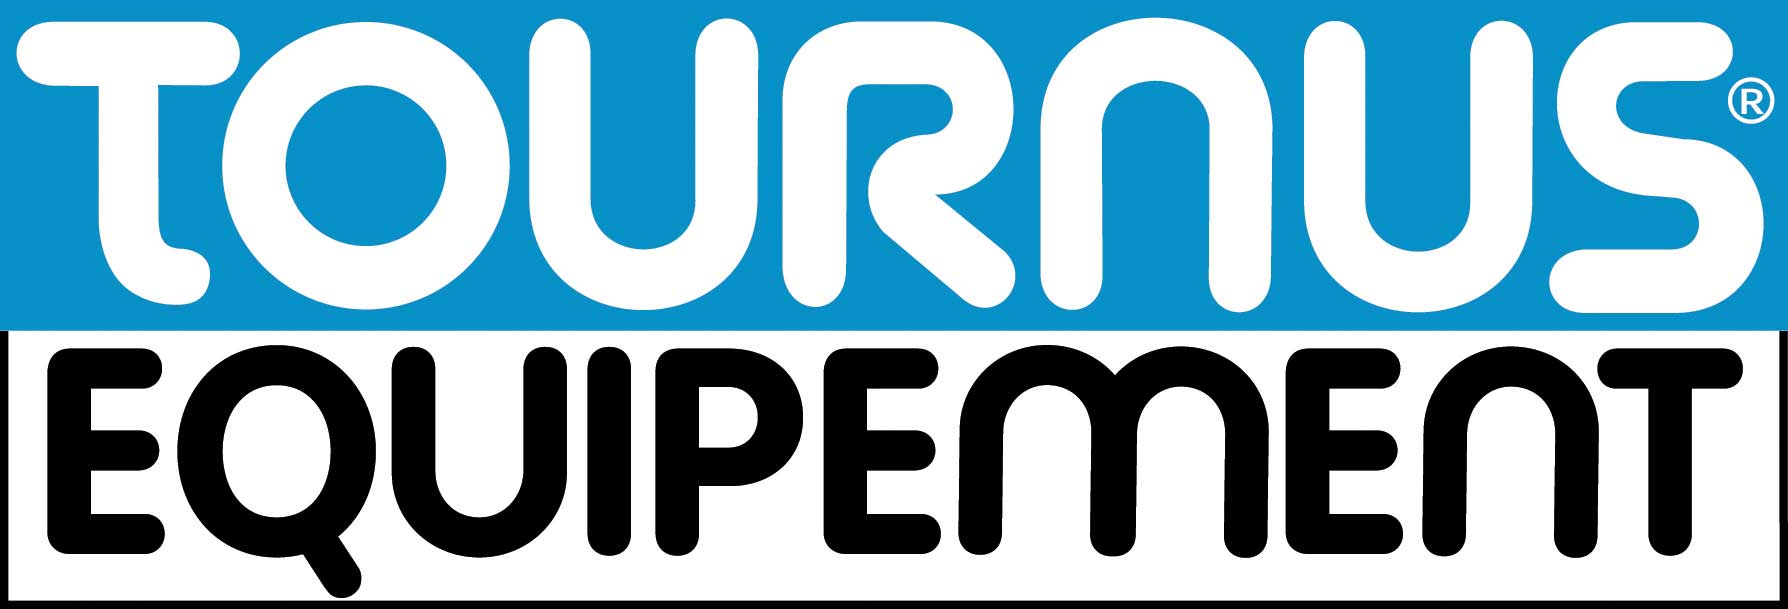 Tournus logo